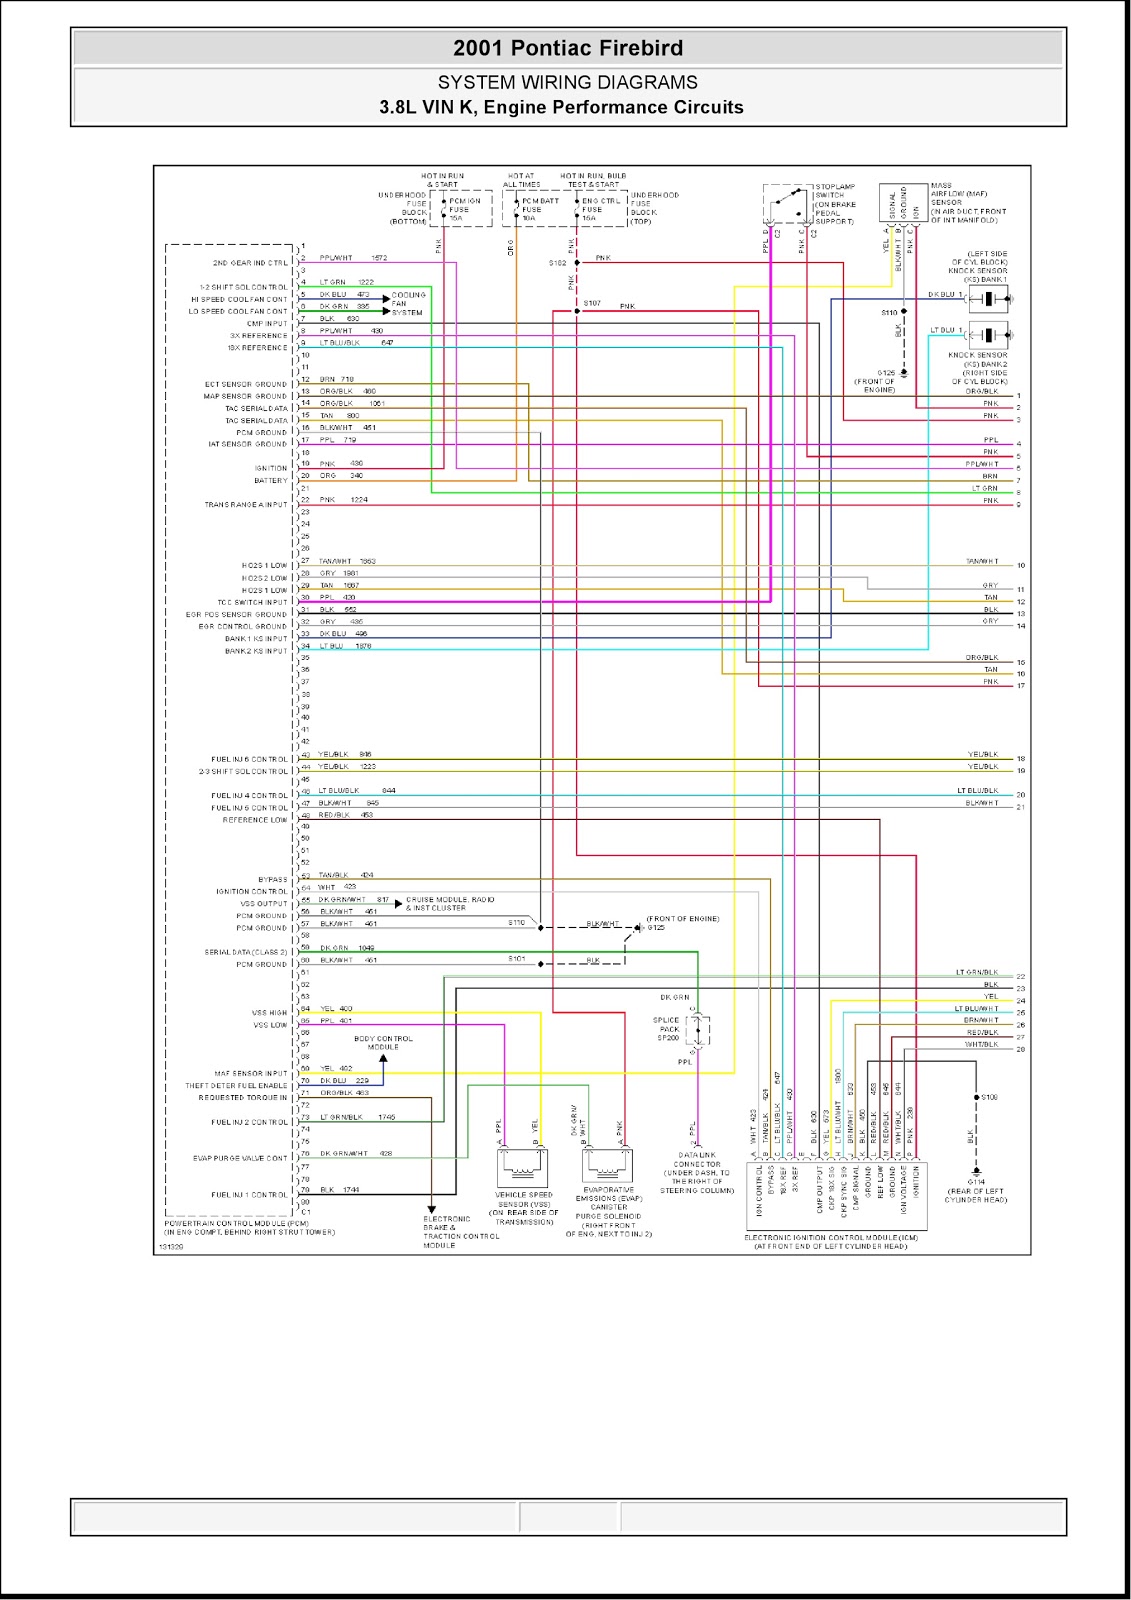 2001 Pontiac Firebird System Wiring Diagrams 16 3.8L VIN K, Engine